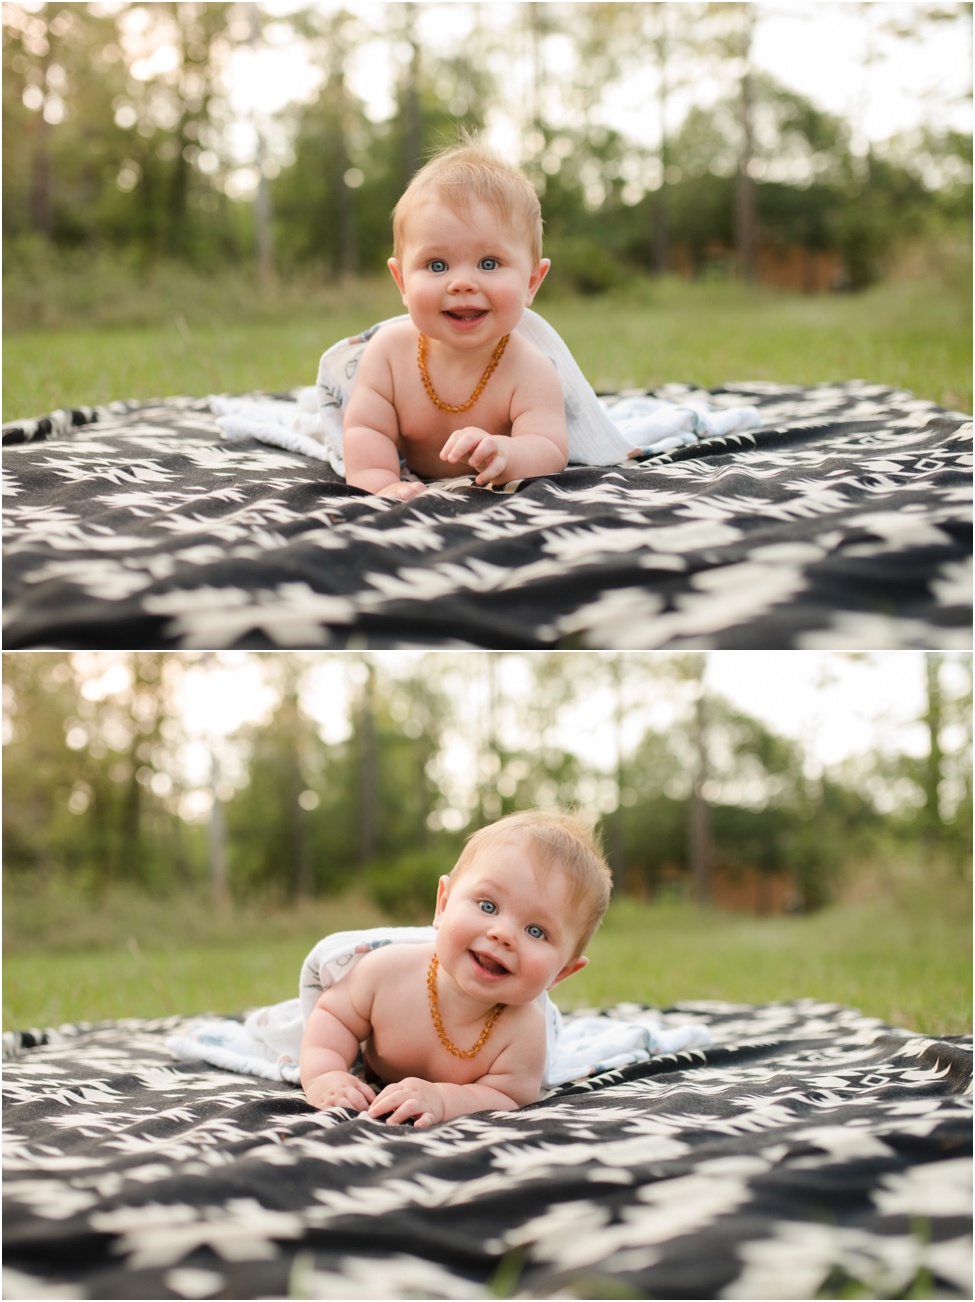 6 month old baby boy giggling | Atlantic Beach children photographer